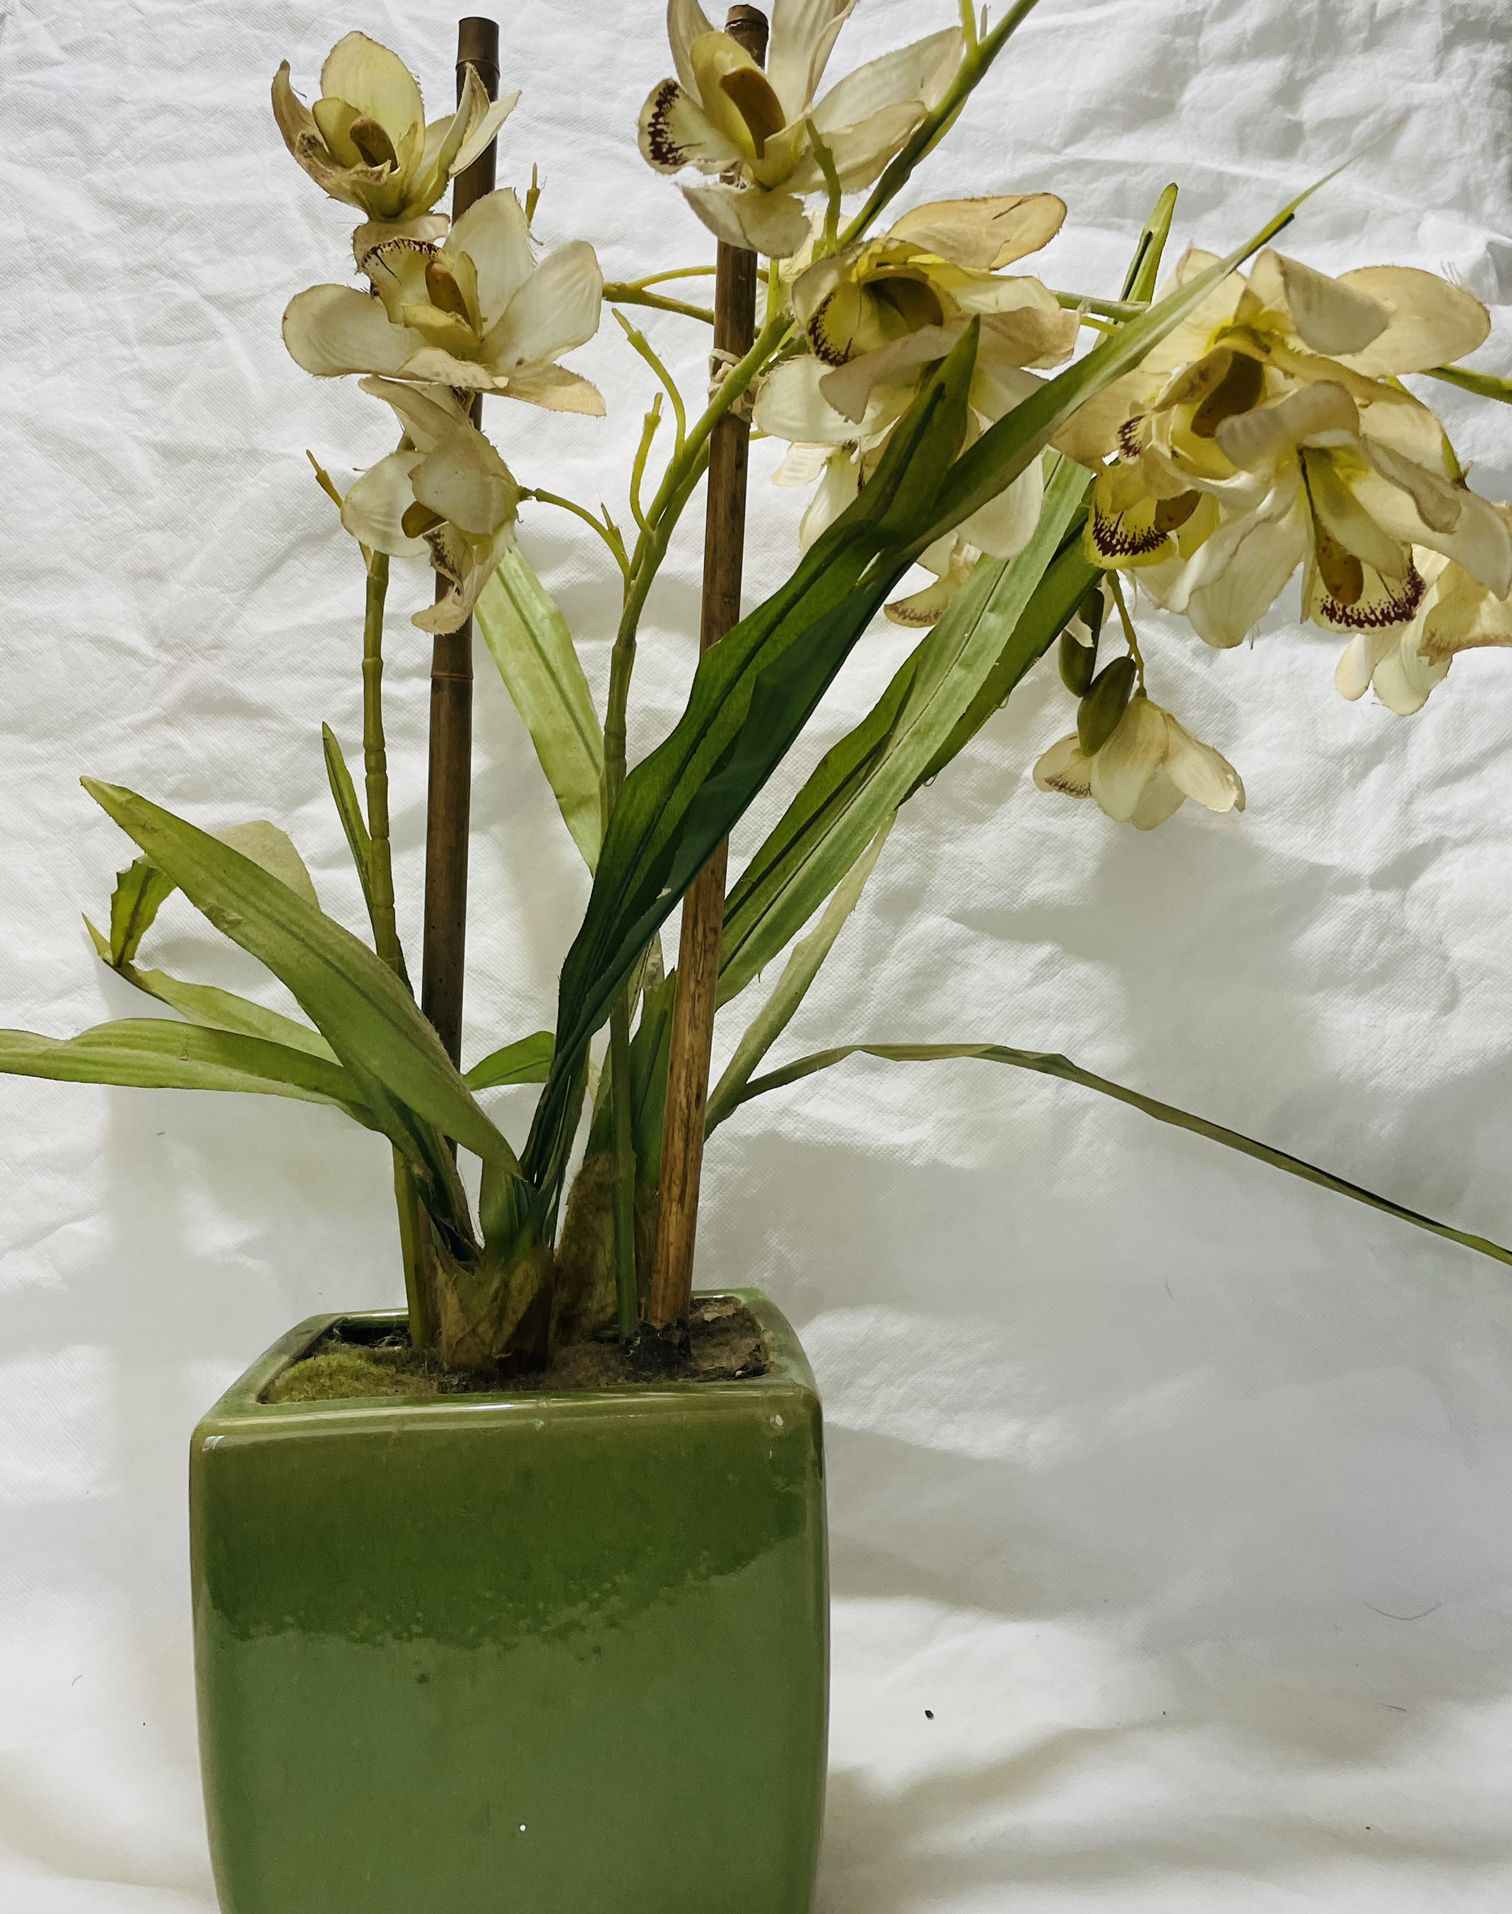 Imitation Flowers In Green Pot